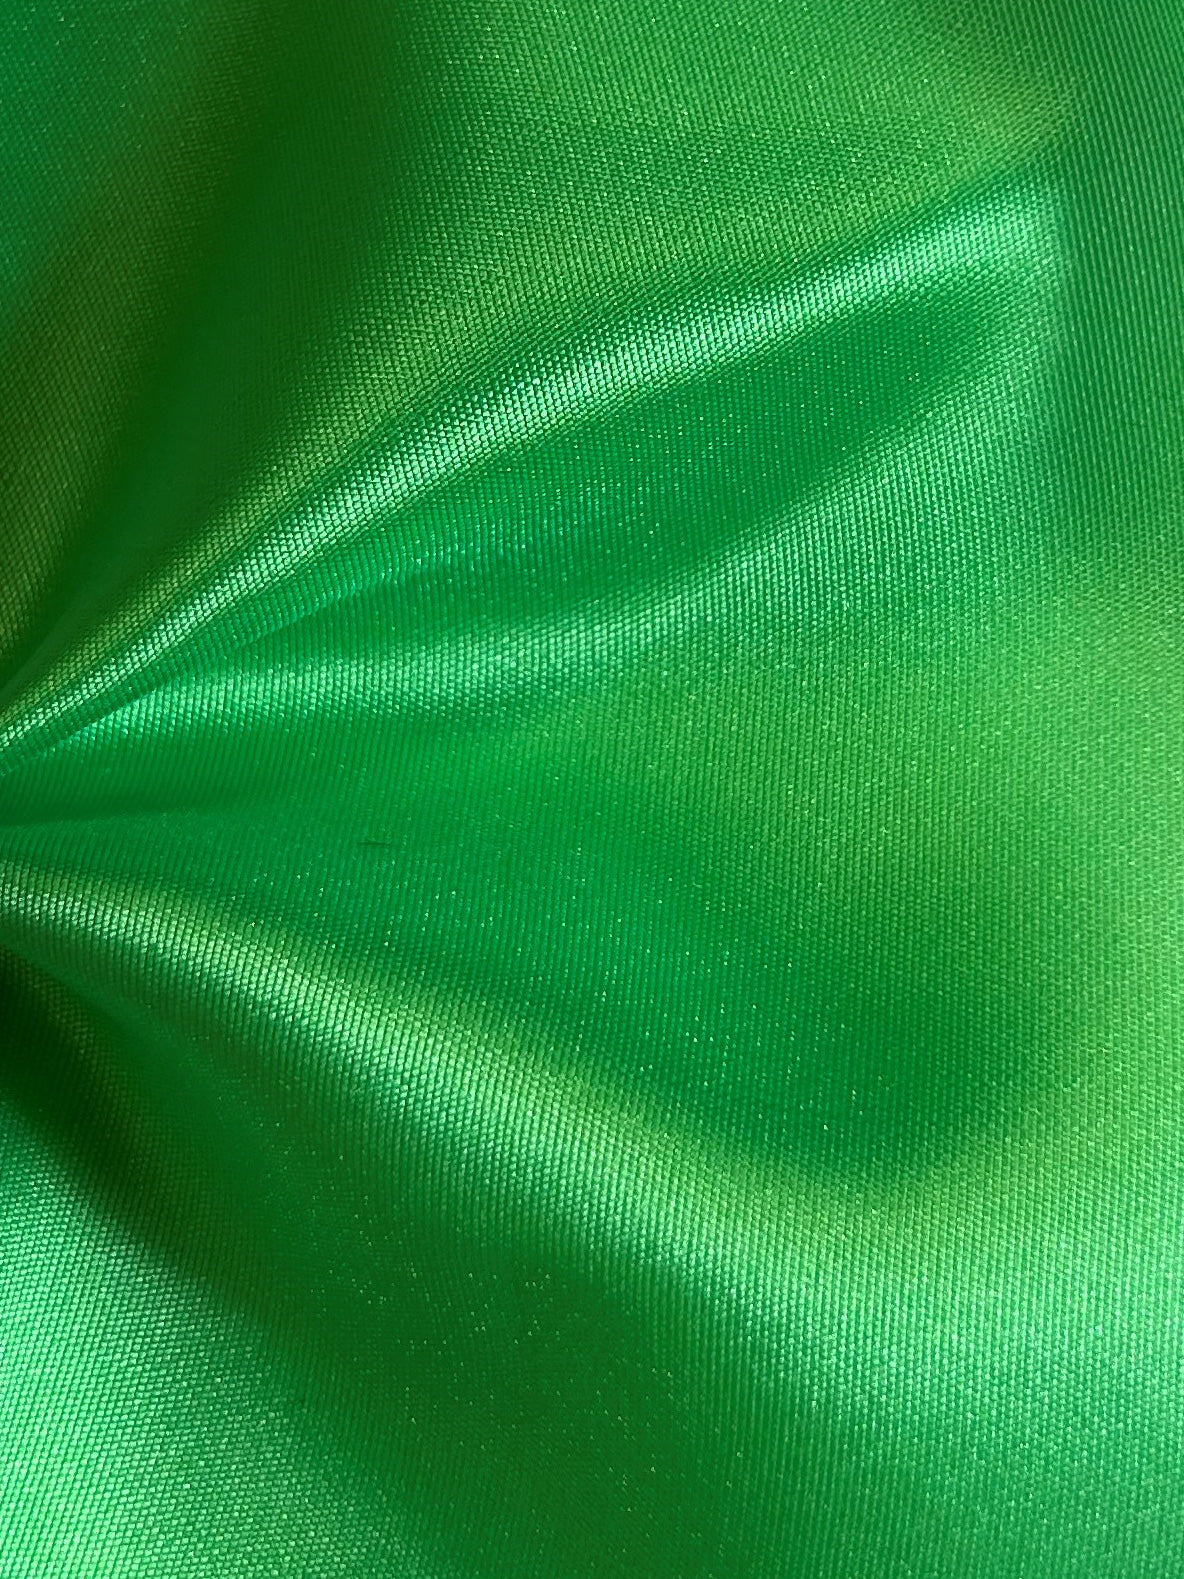 Taffetas Polyester Vert Amazone - Valse